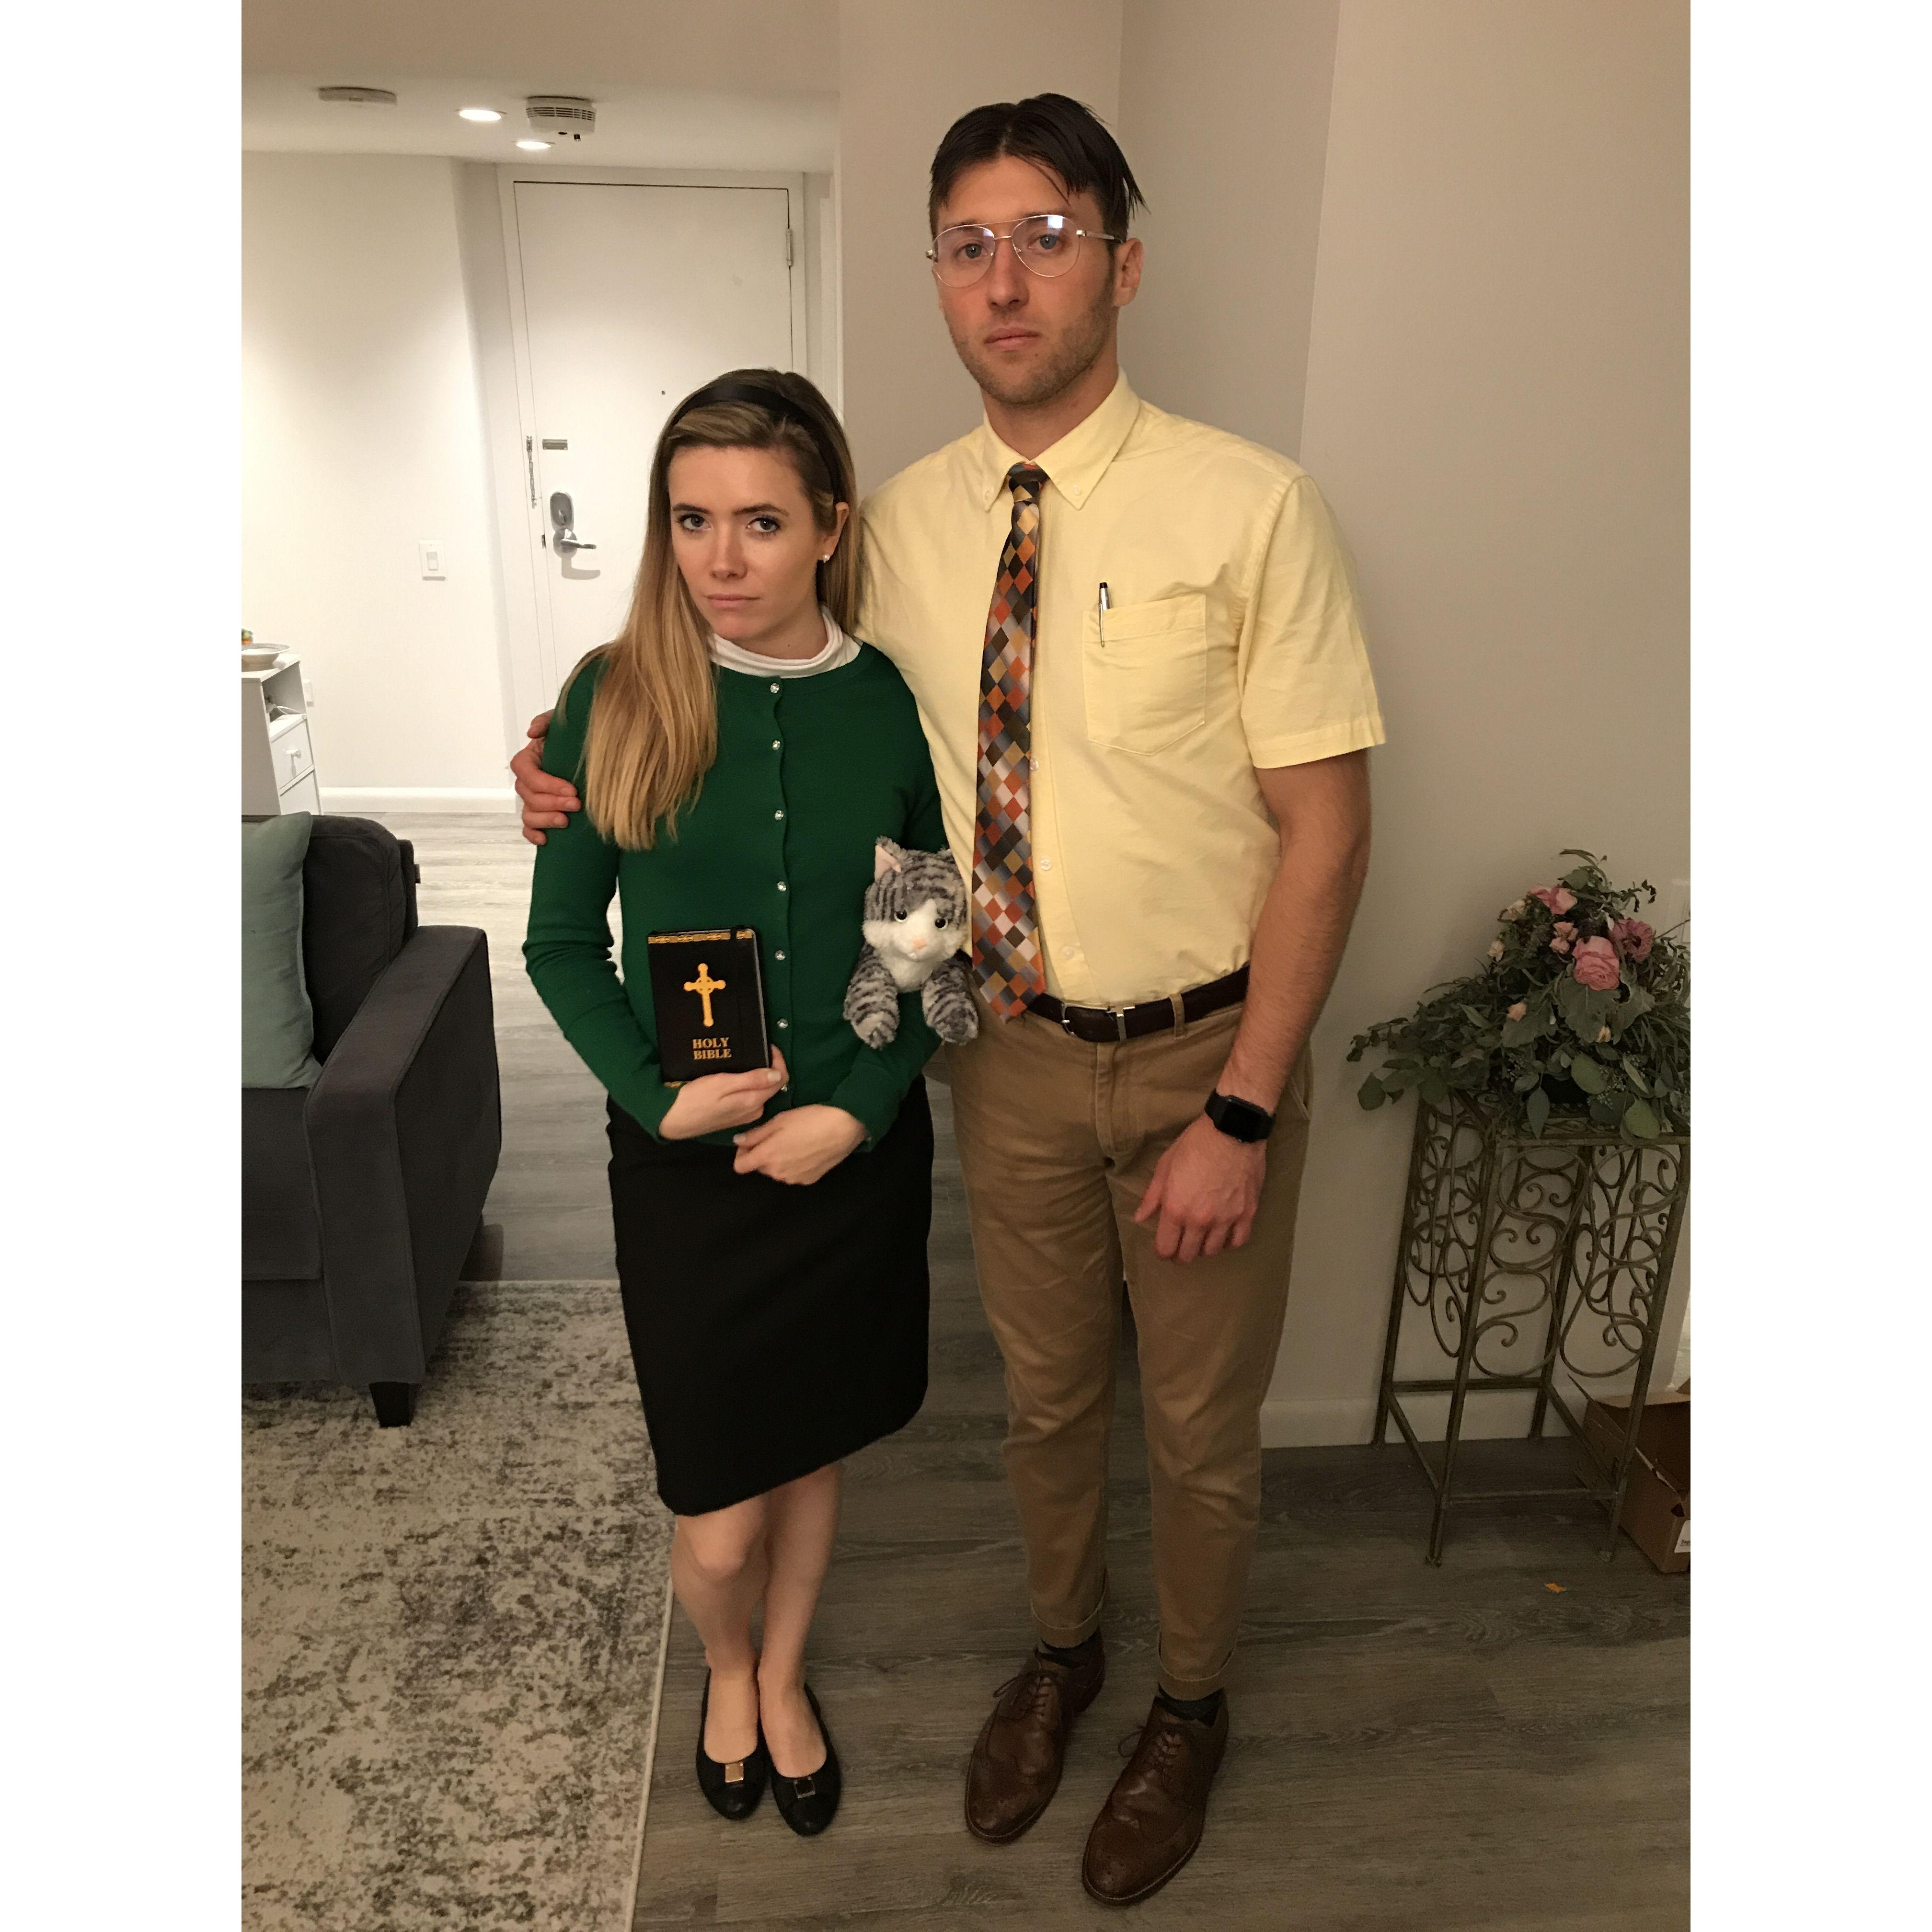 Dwight and Angela, Halloween - Philadelphia, PA 2019